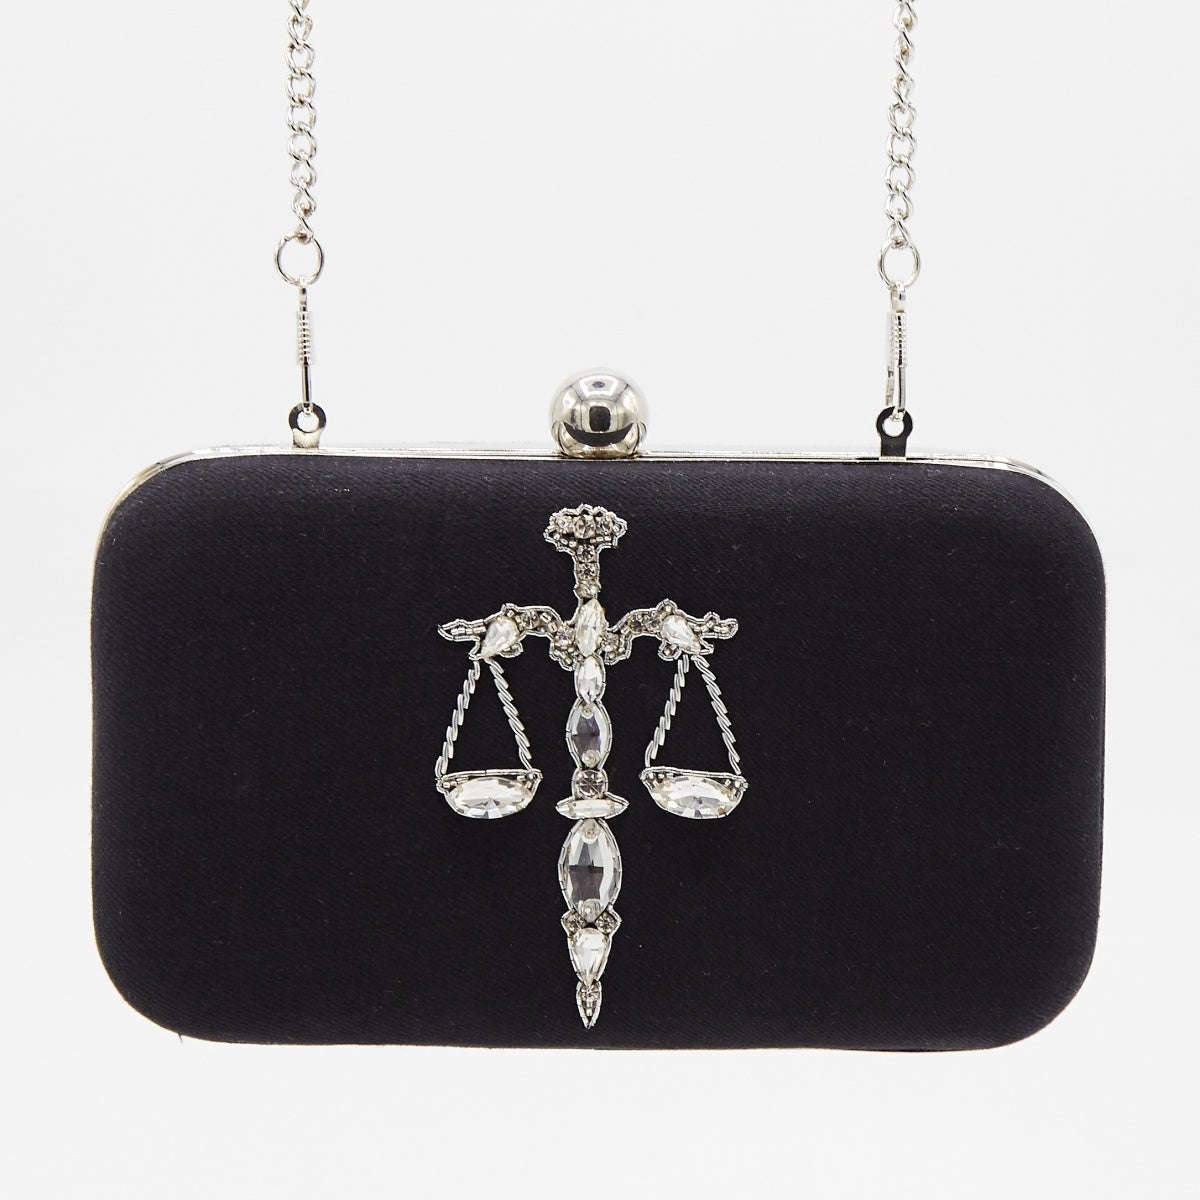 The Balanced Libra Denim Clutch Bag by Madish